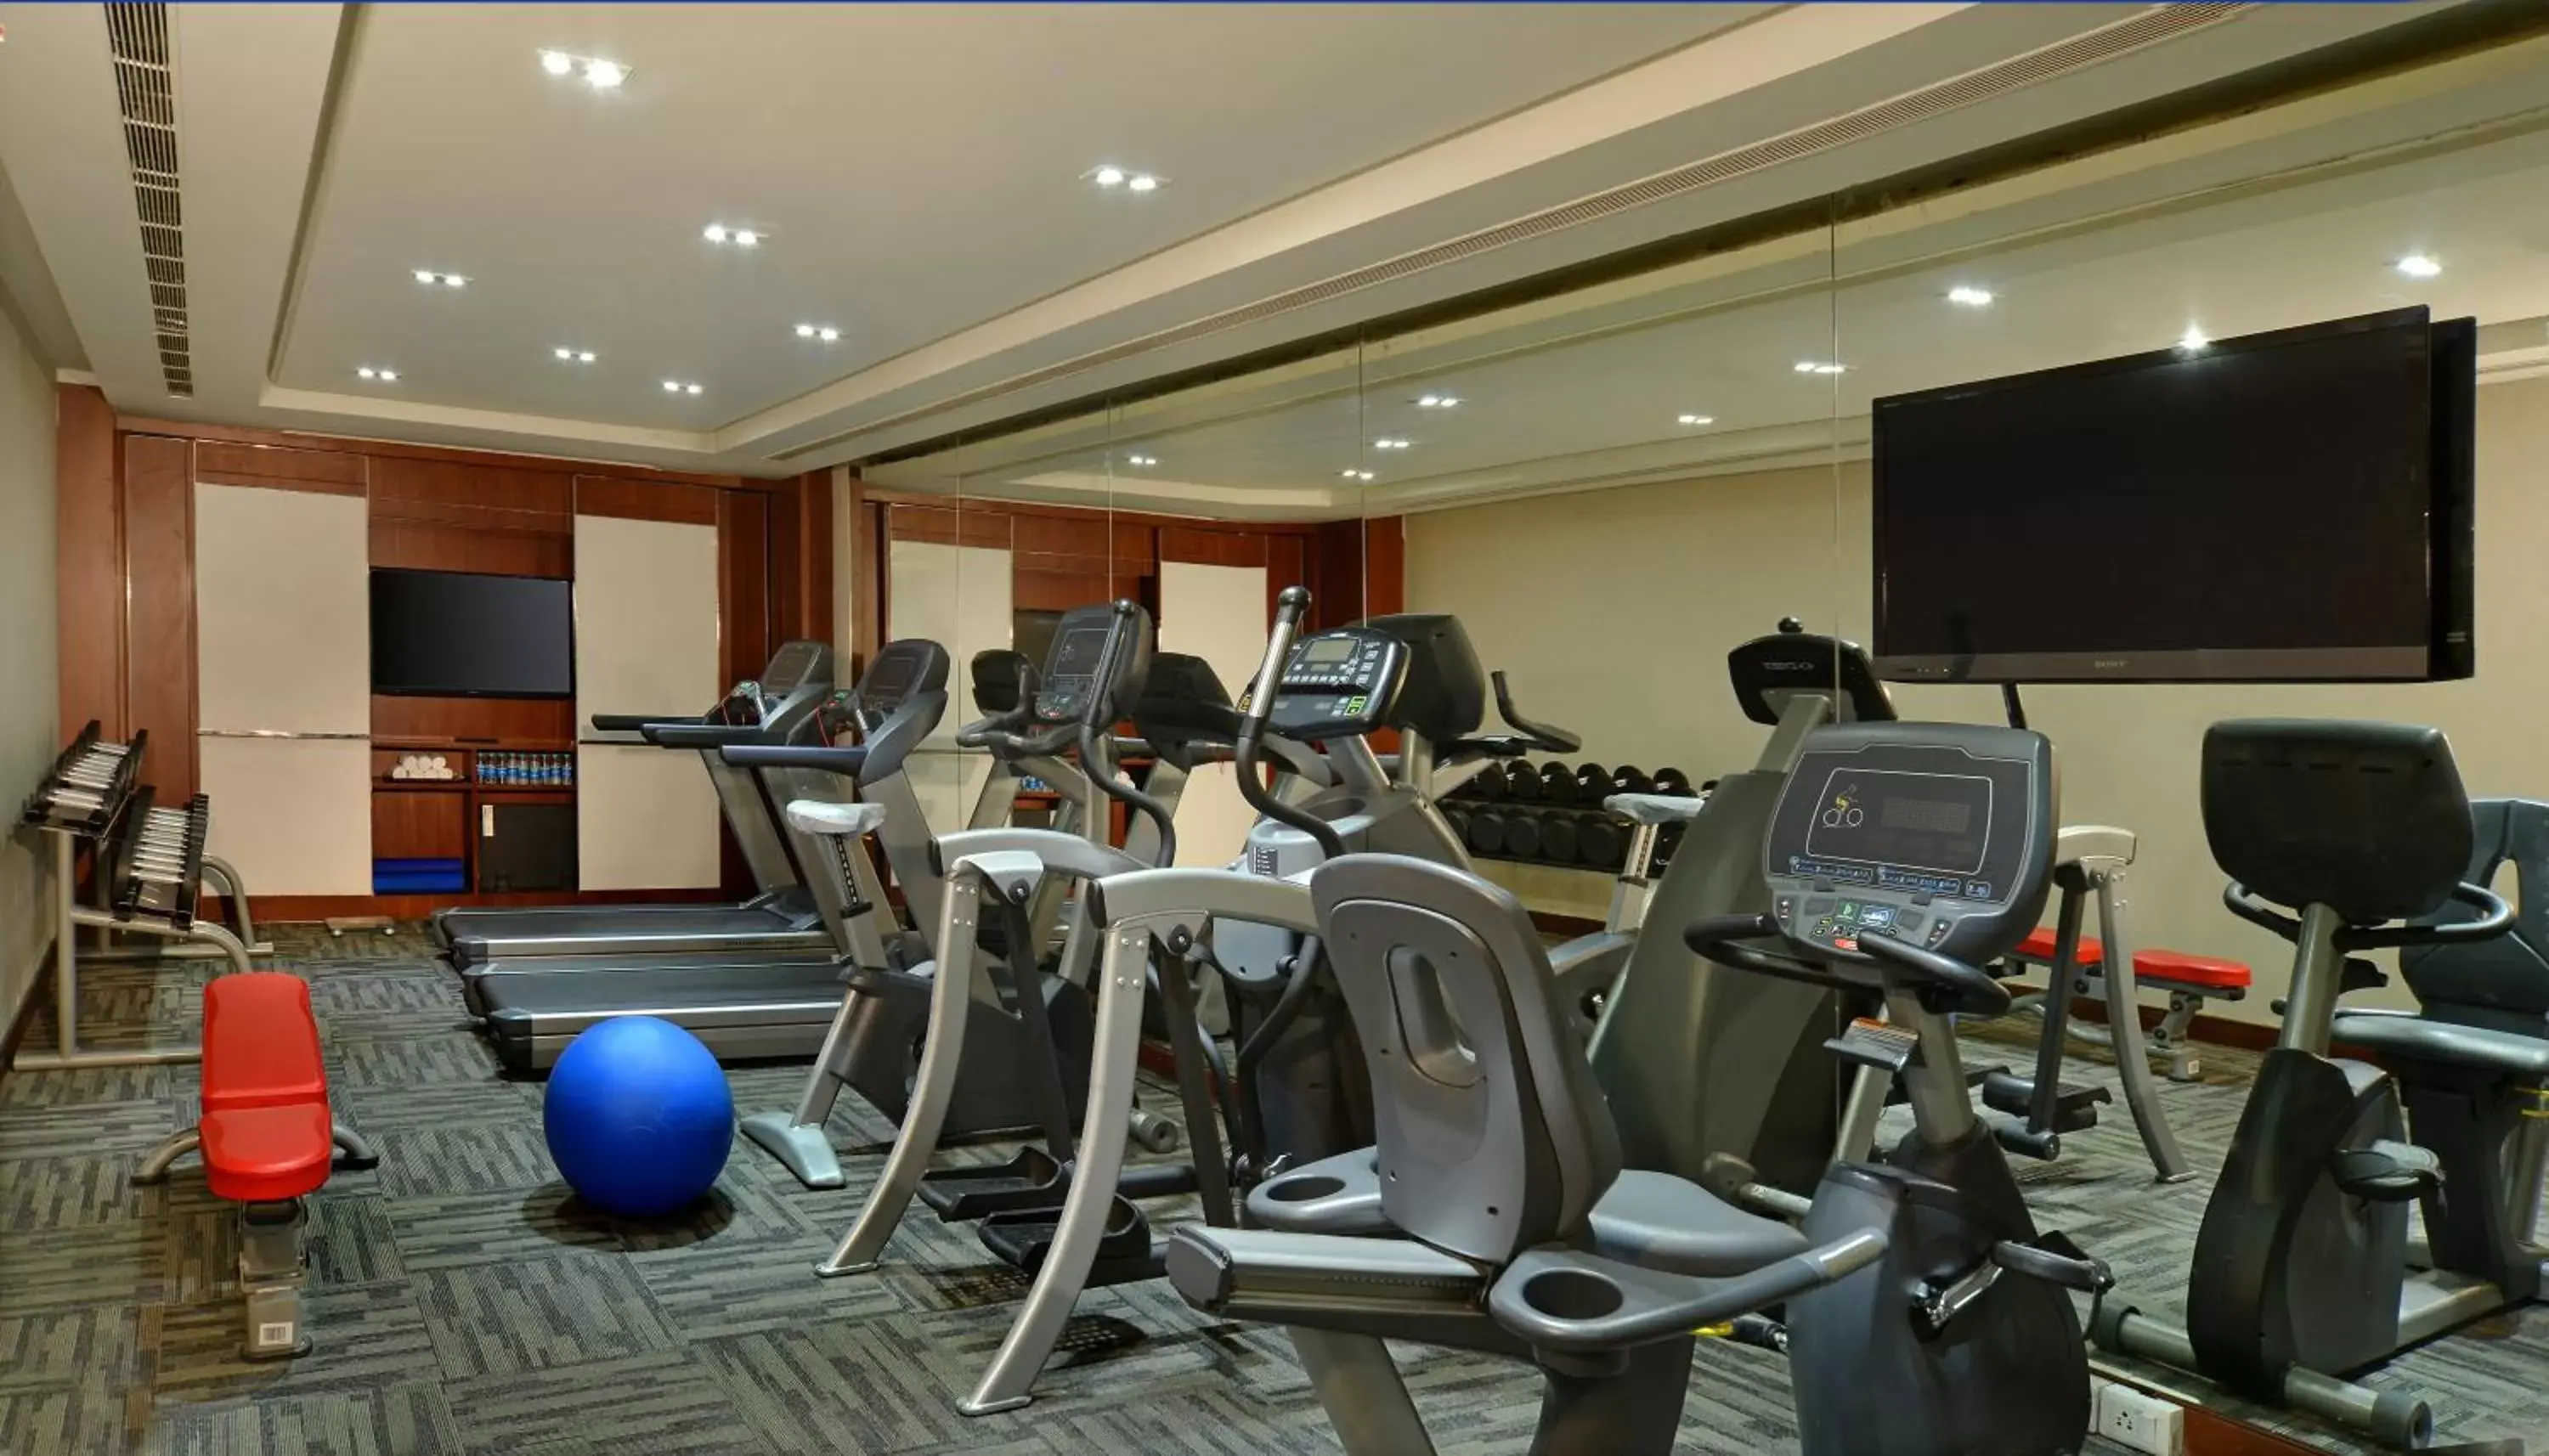 Fitness centre/facilities, Fitness Center/Facilities in Radisson Blu Jaipur